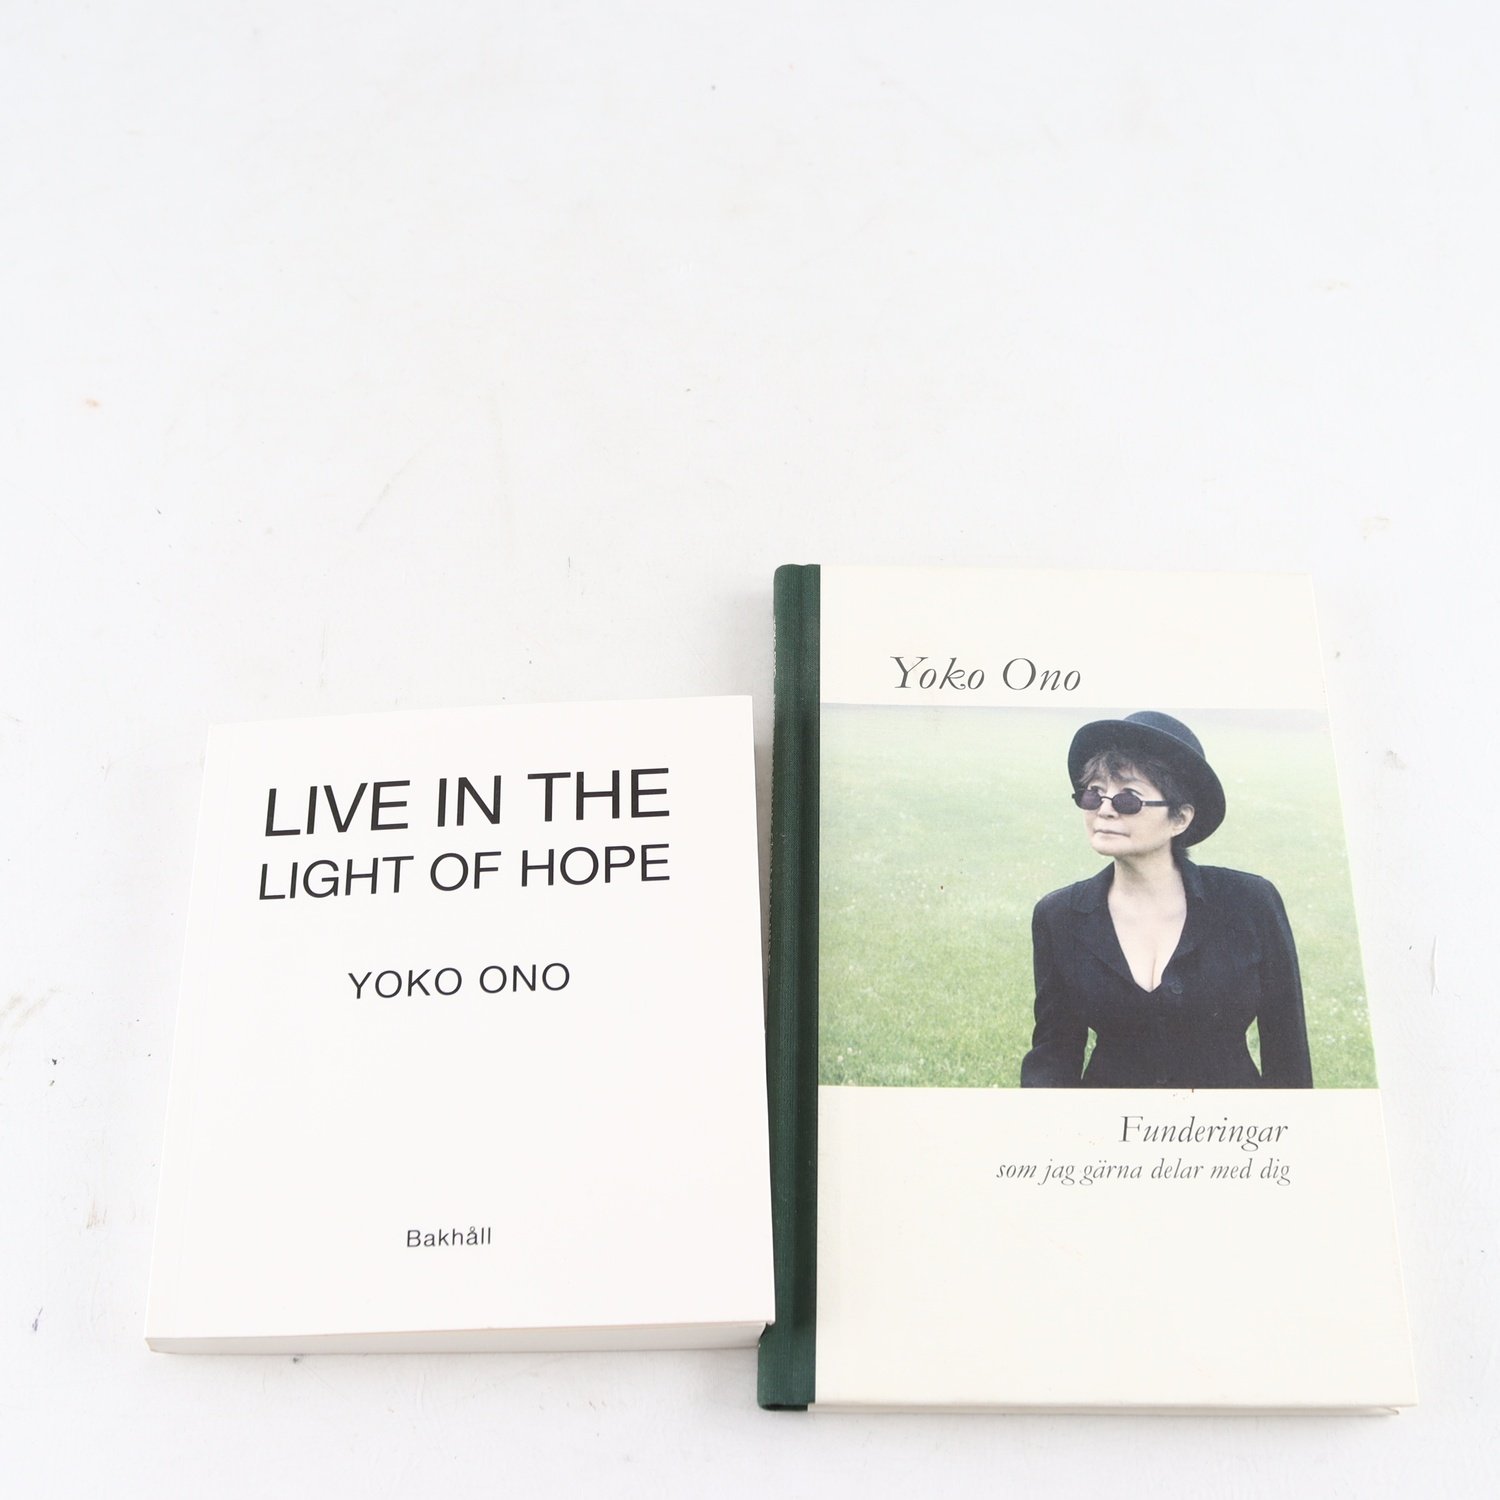 Yoko Ono, Funderingar & Live in the Light of Hope